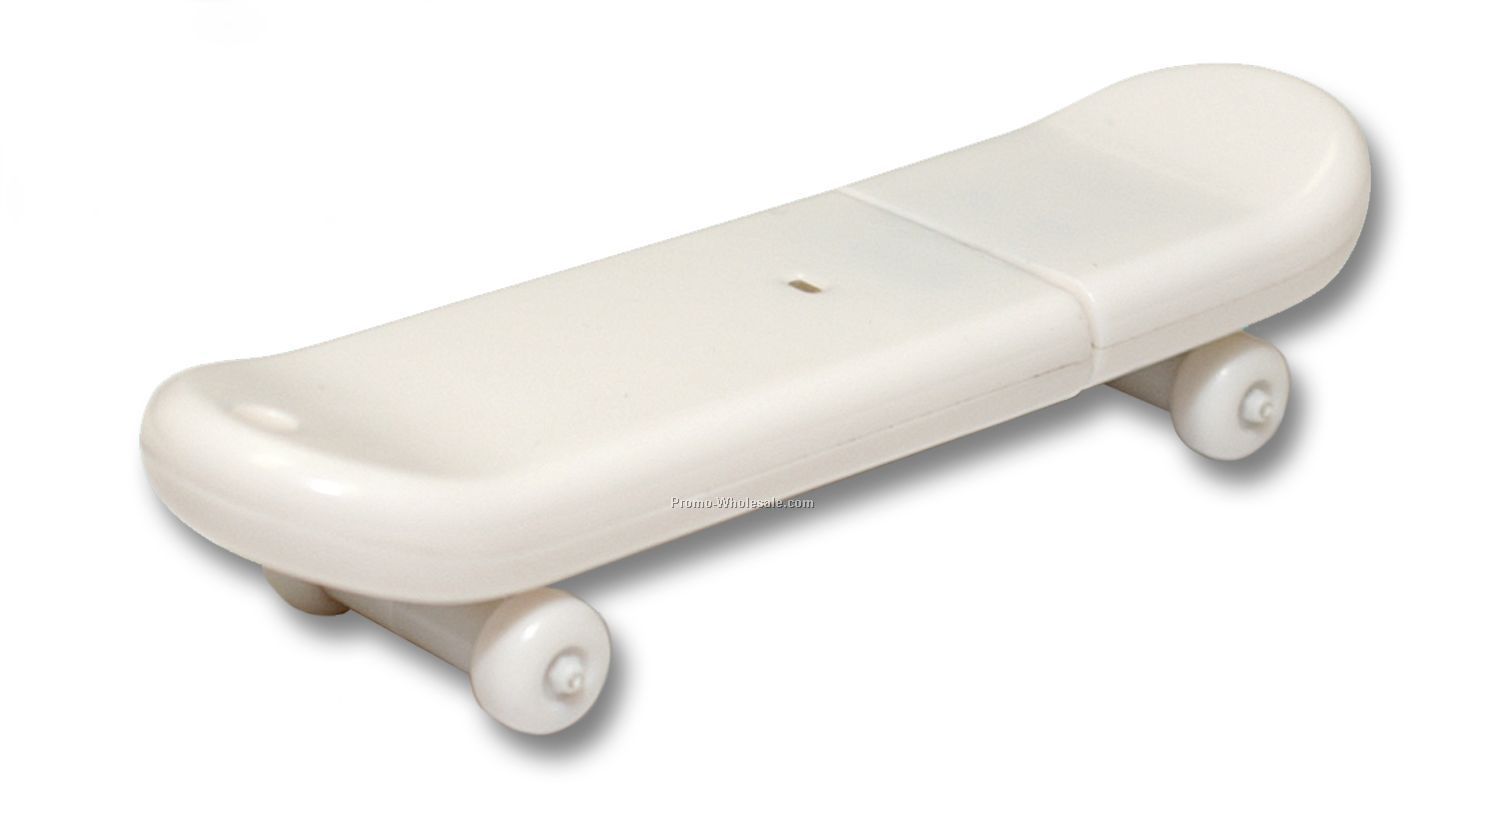 2gb Usb2.0 Skateboard Flash Drive - Rubber Coated White